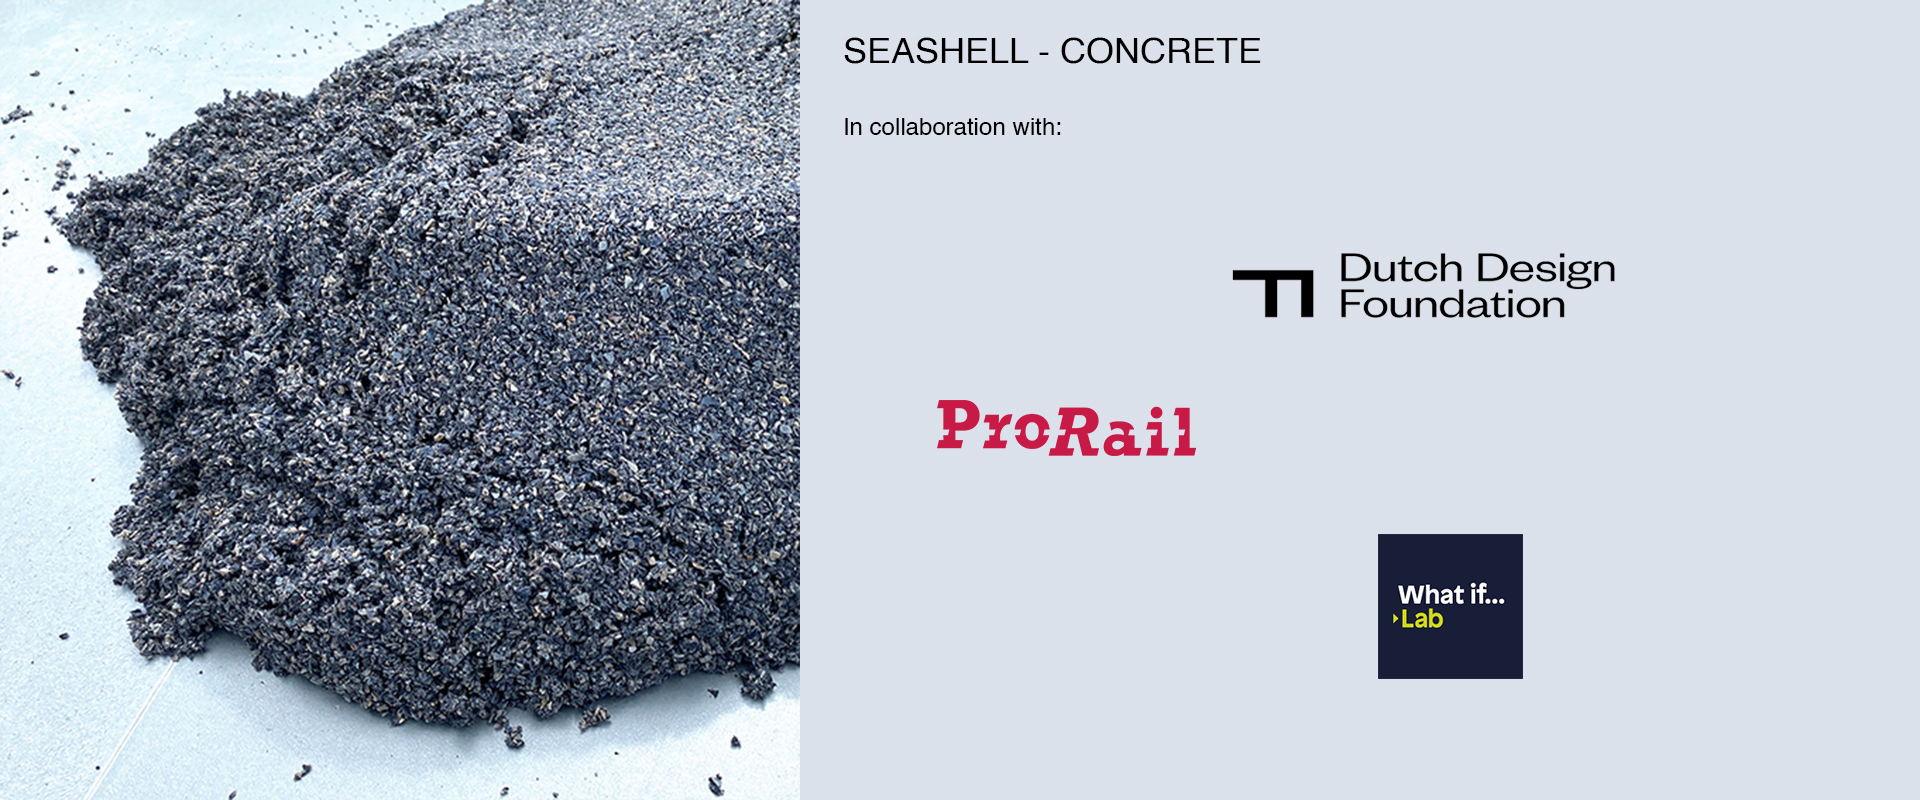 Seashell - concrete